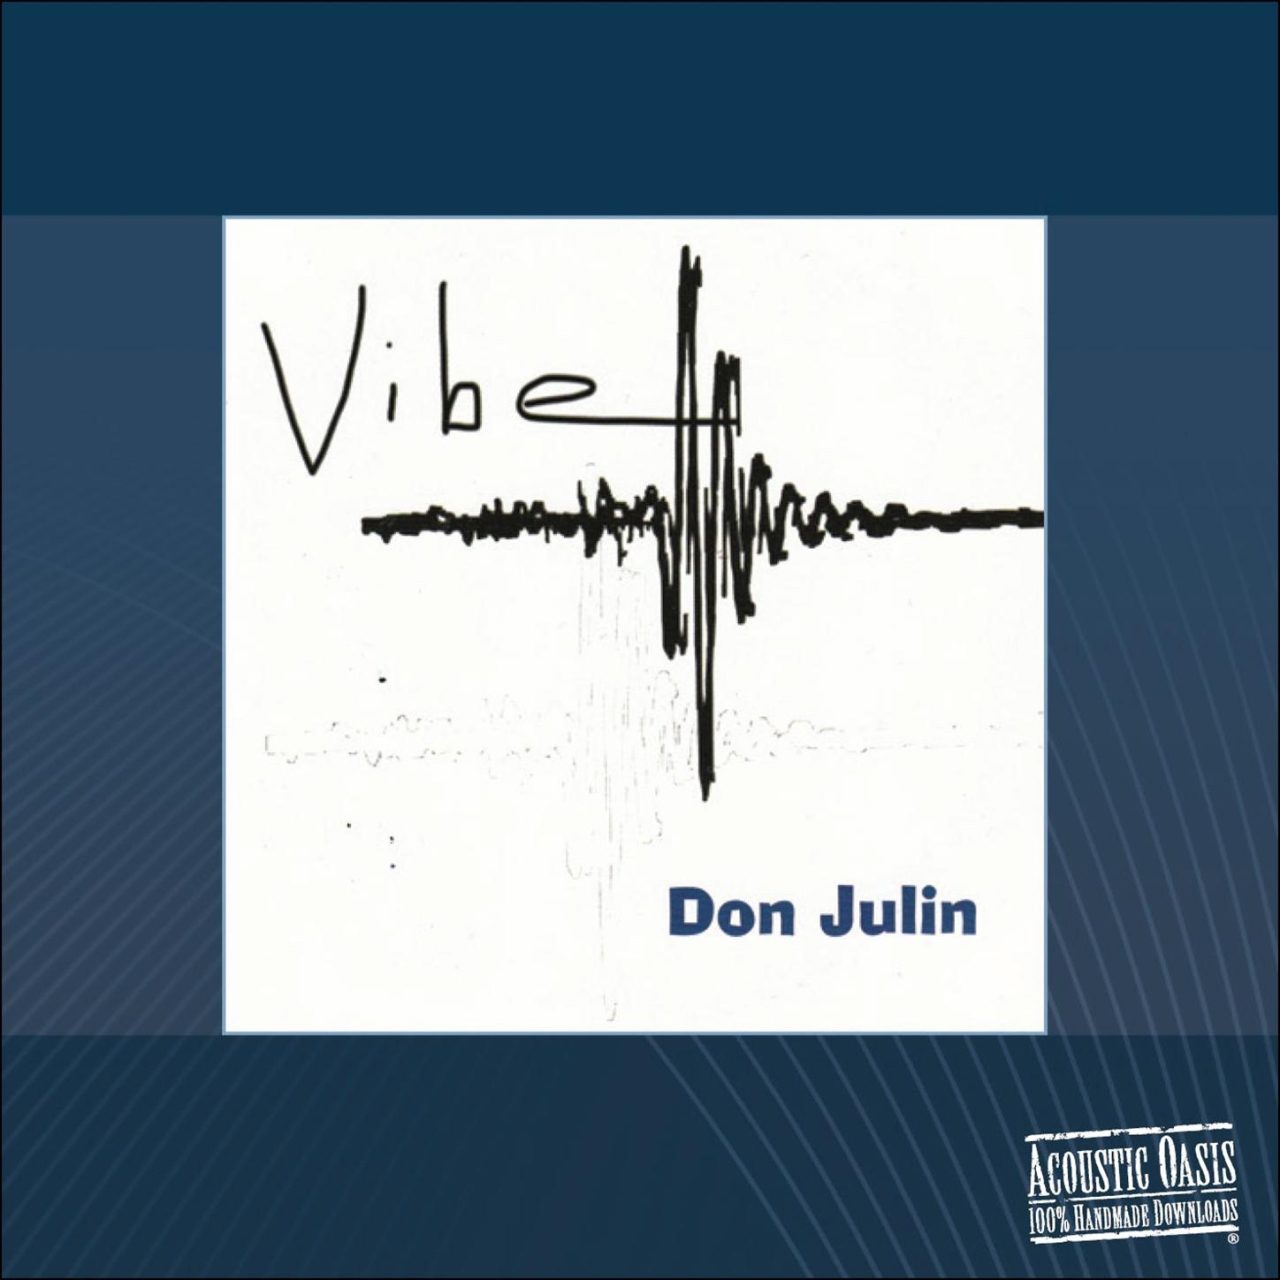 Don Julin - Vibe cover album